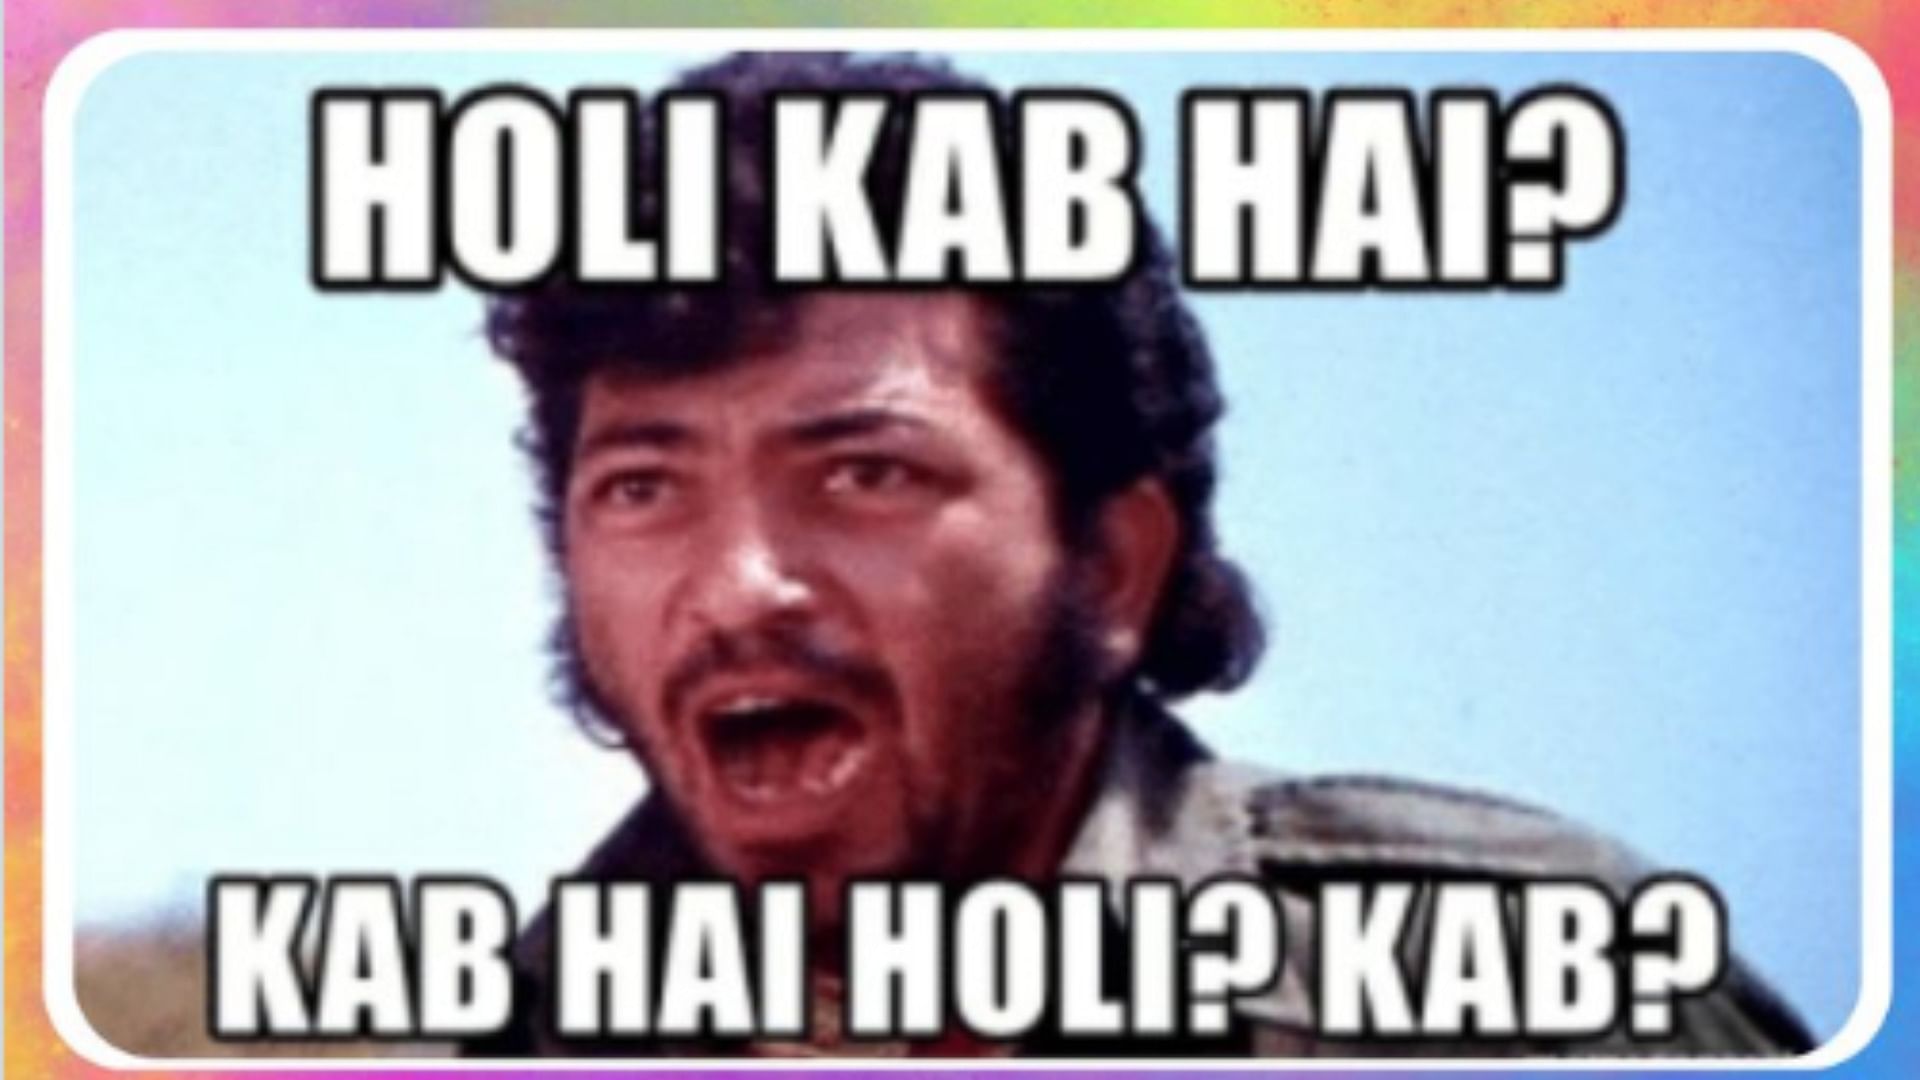 Holi Memes Viral On Twitter Hilarious Memes And Jokes On Holi